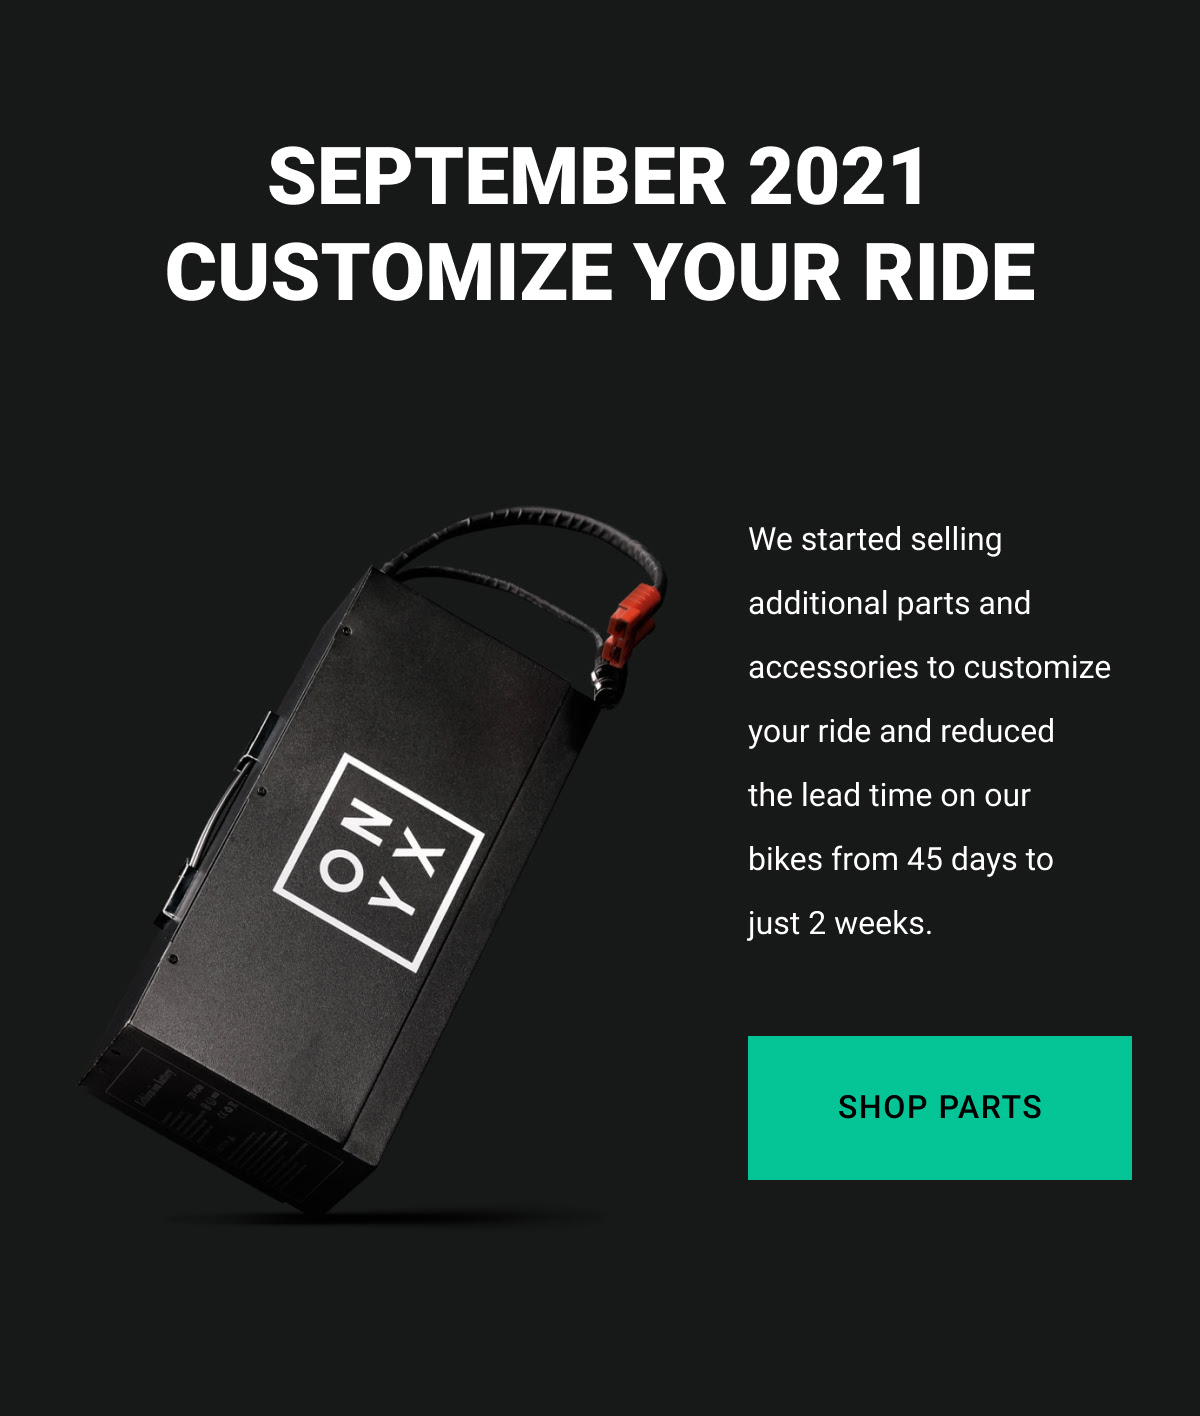 September 2021: Customize Your Ride